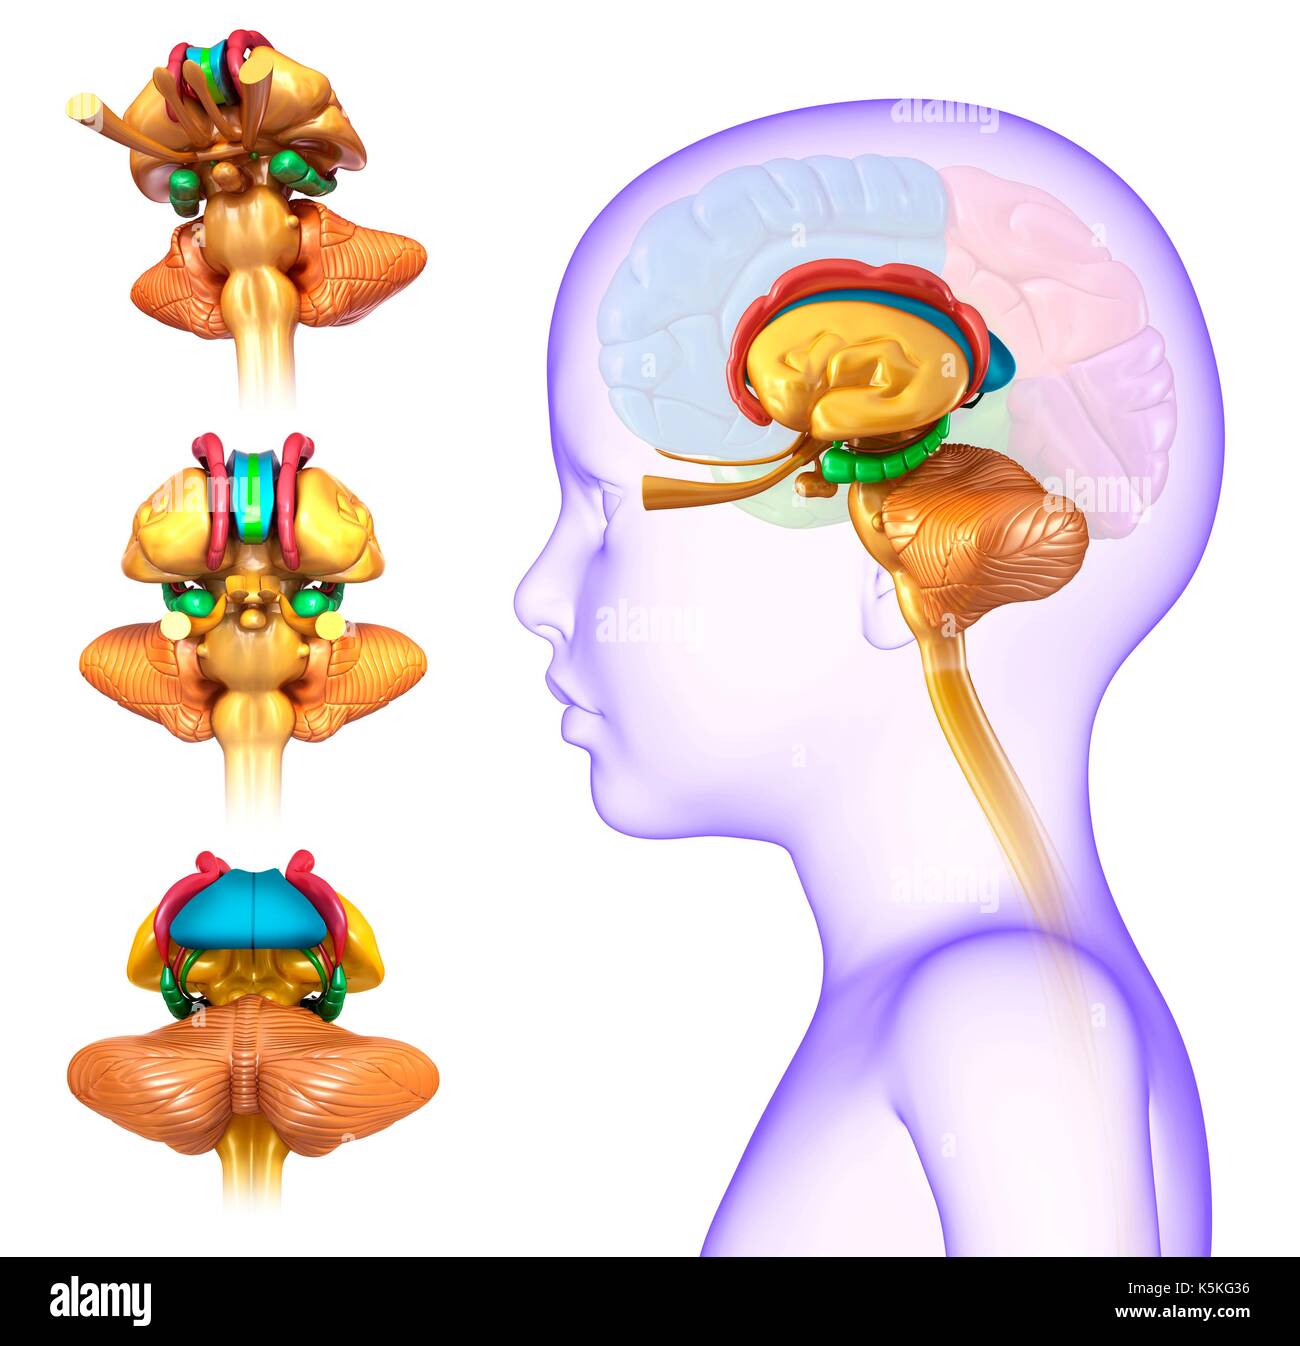 Ilustracion De Una Anatomia Del Cerebro Del Nino Fotografia De Stock Images 3659